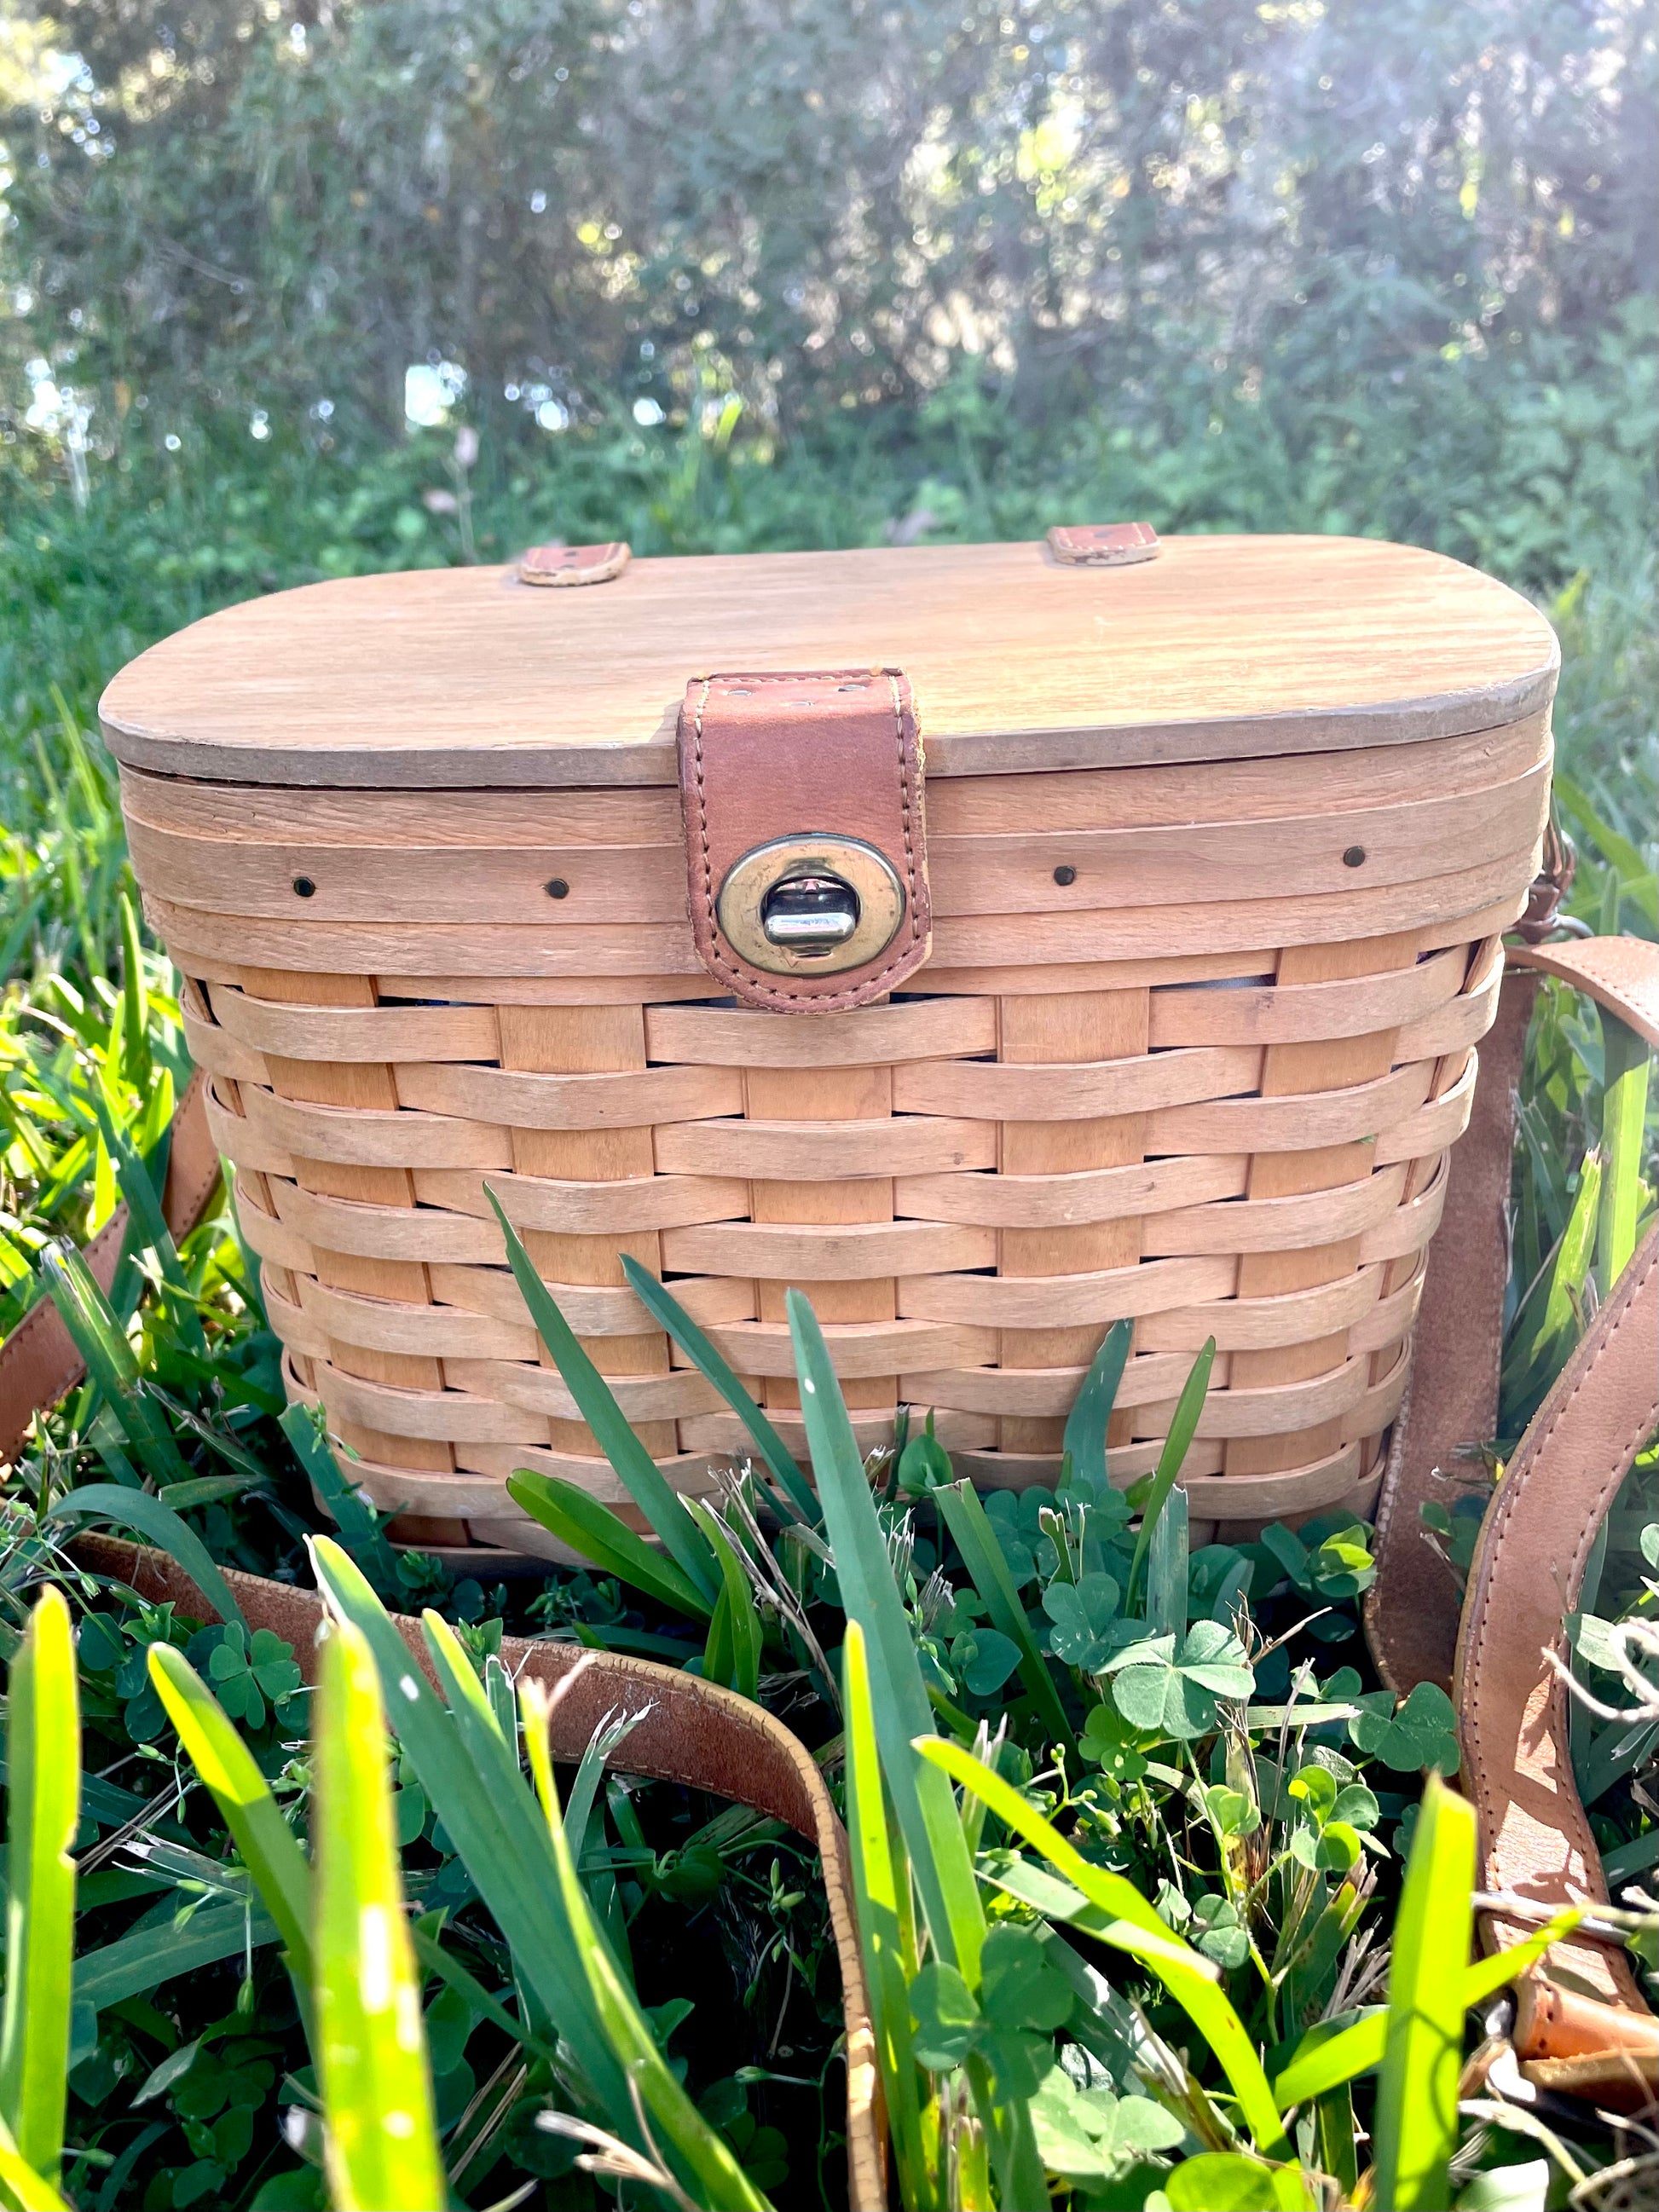 Vintage Longaberger Picnic Basket Purse with Leather Strap – The Broken  Bird Company